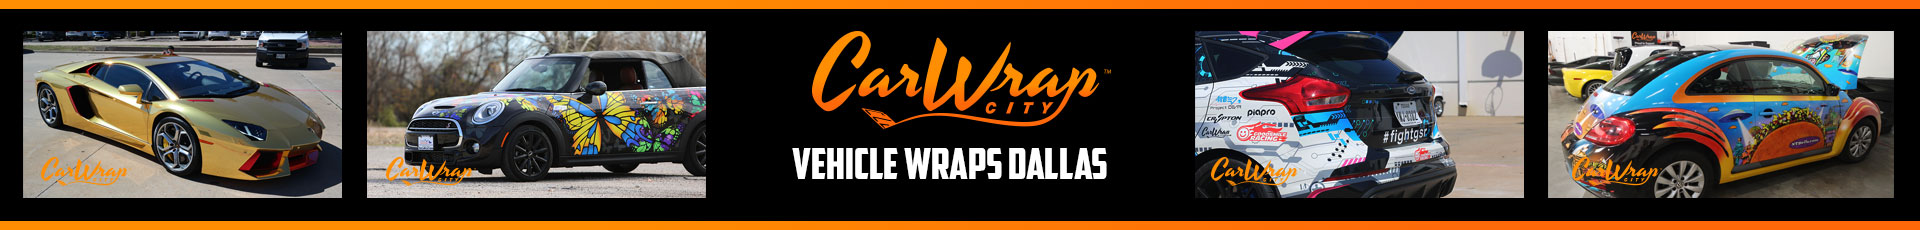 Vehicle Wraps Dallas